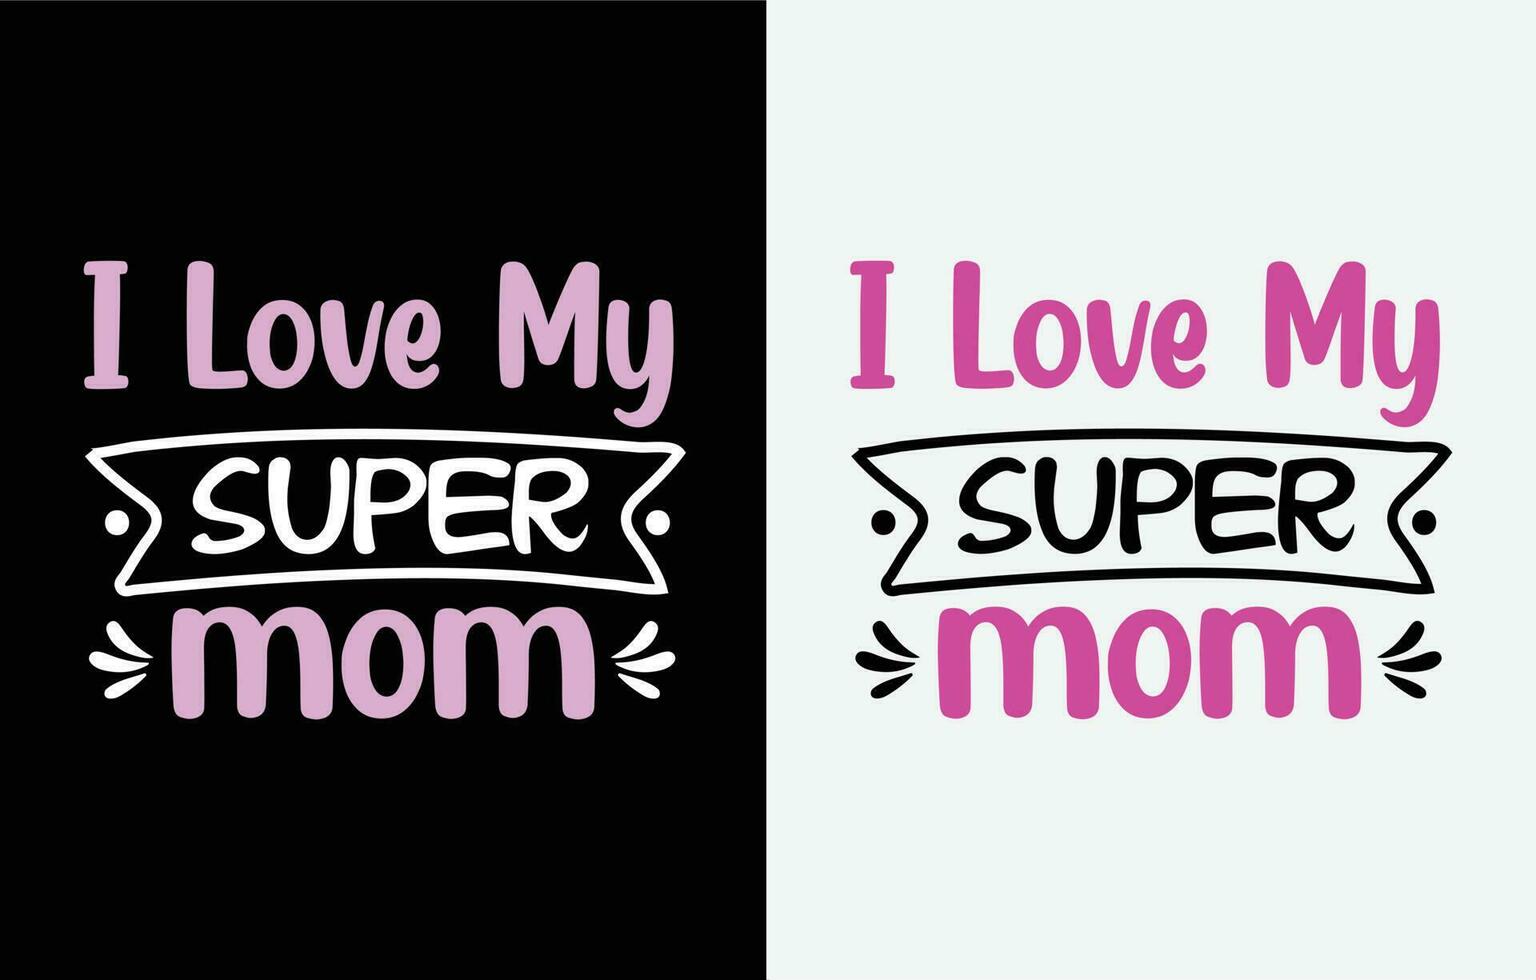 Web Mom t-shirt design, mother's day t-shirt, mother's day typography t-shirt, mom t-shirt template vector